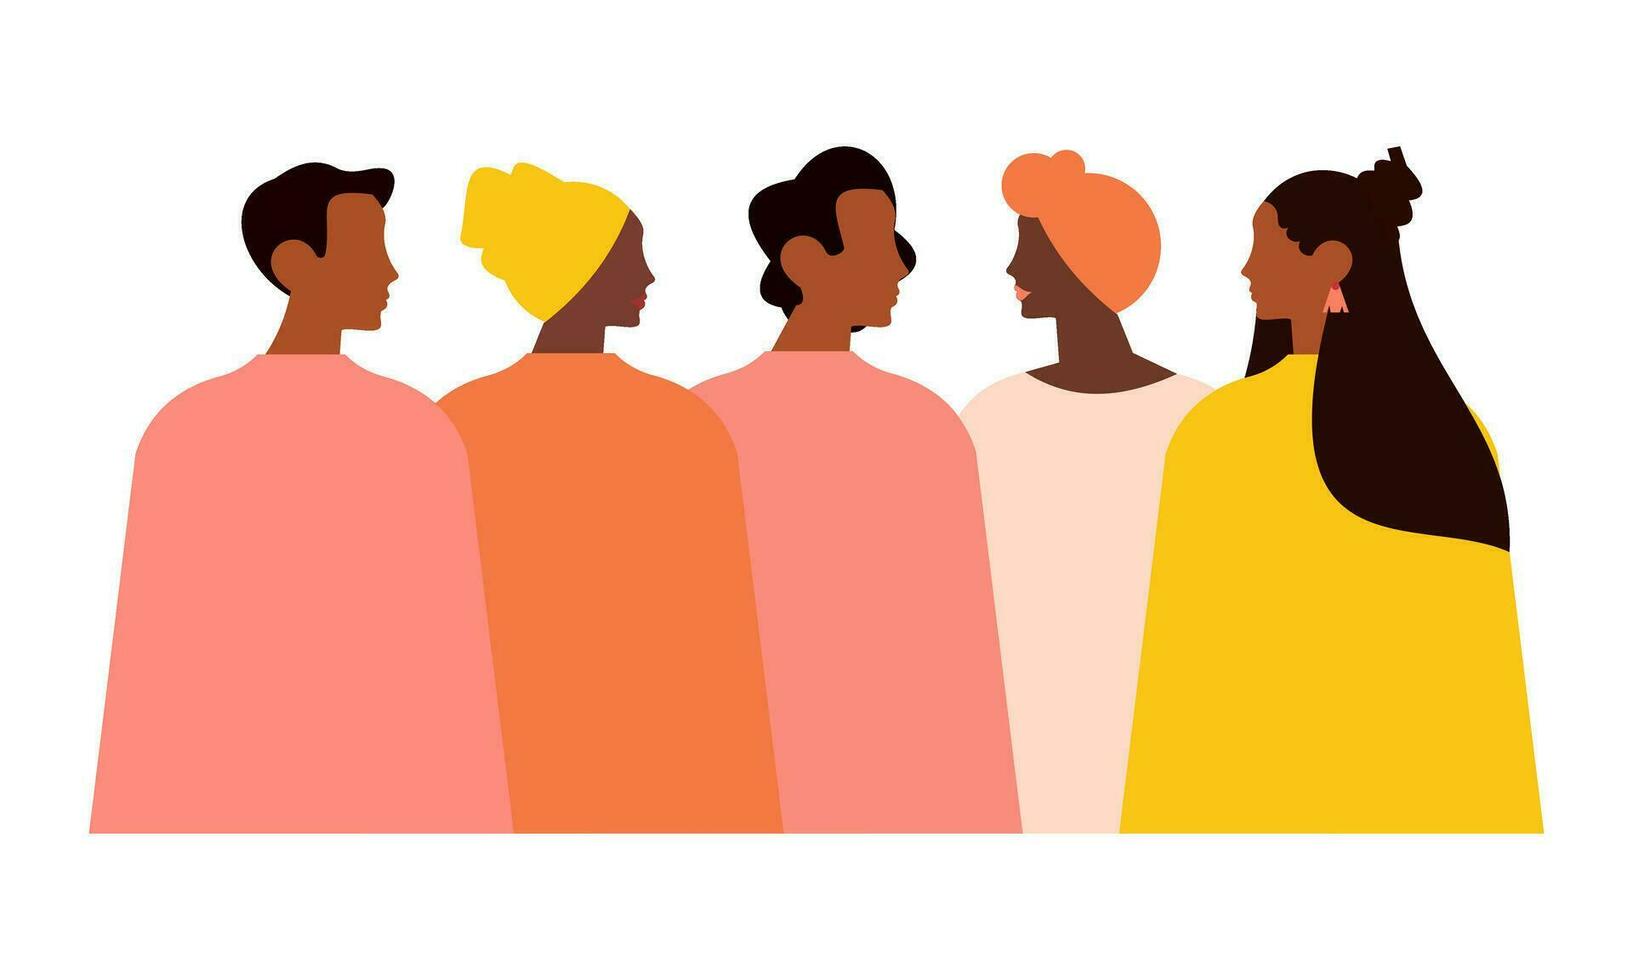 Black community, african people gathered together illustration vector